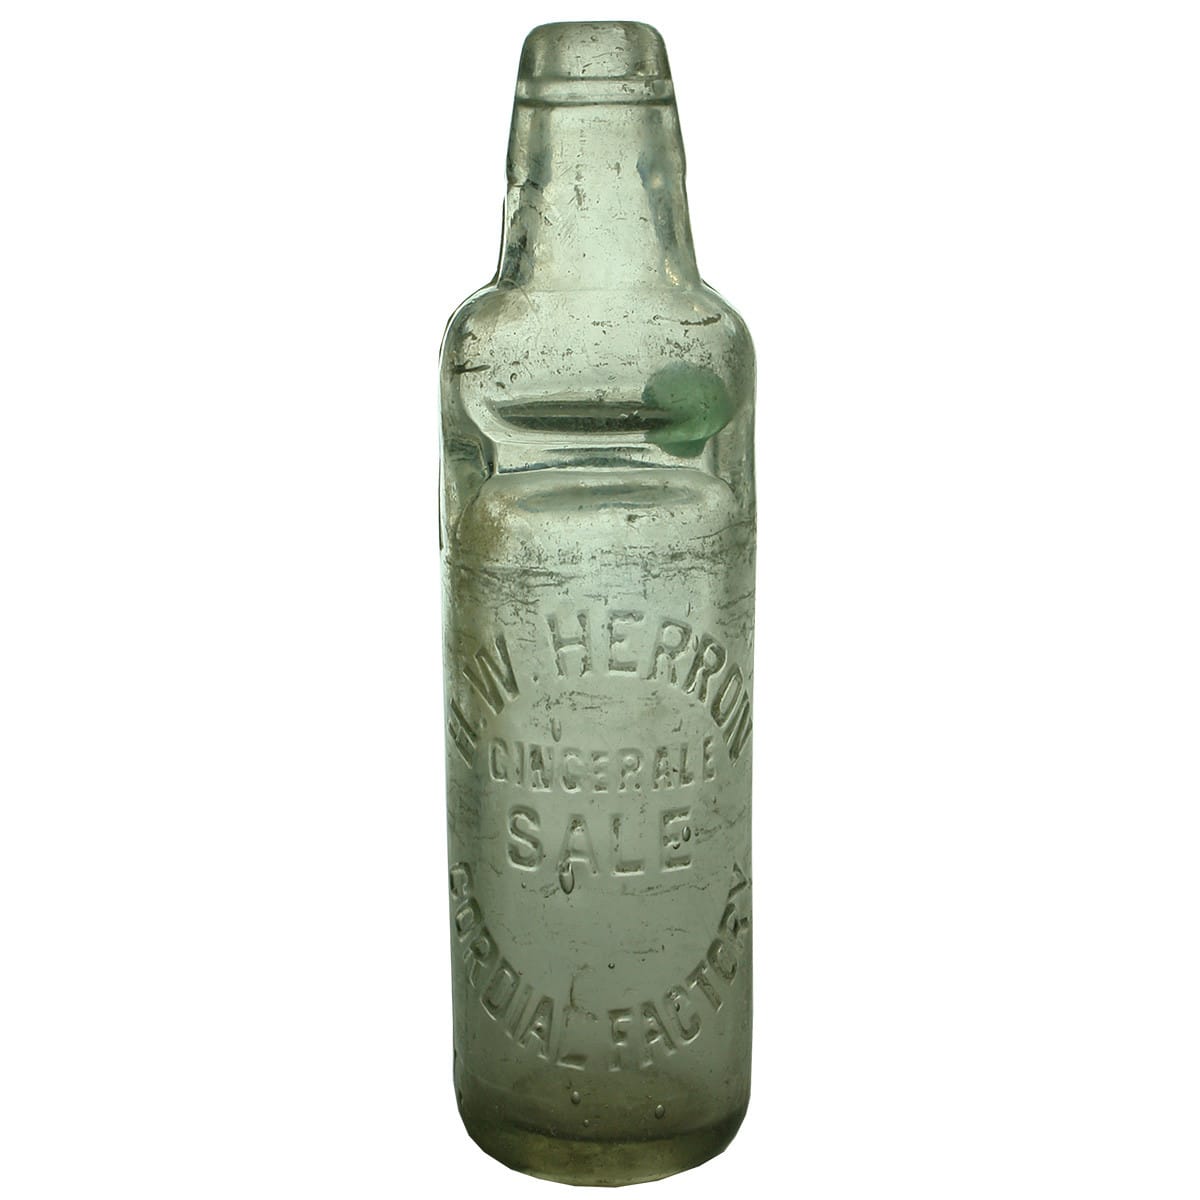 Codd. H. W. Herron, Sale. Ginger Ale. Clear. 10 oz. (Victoria)